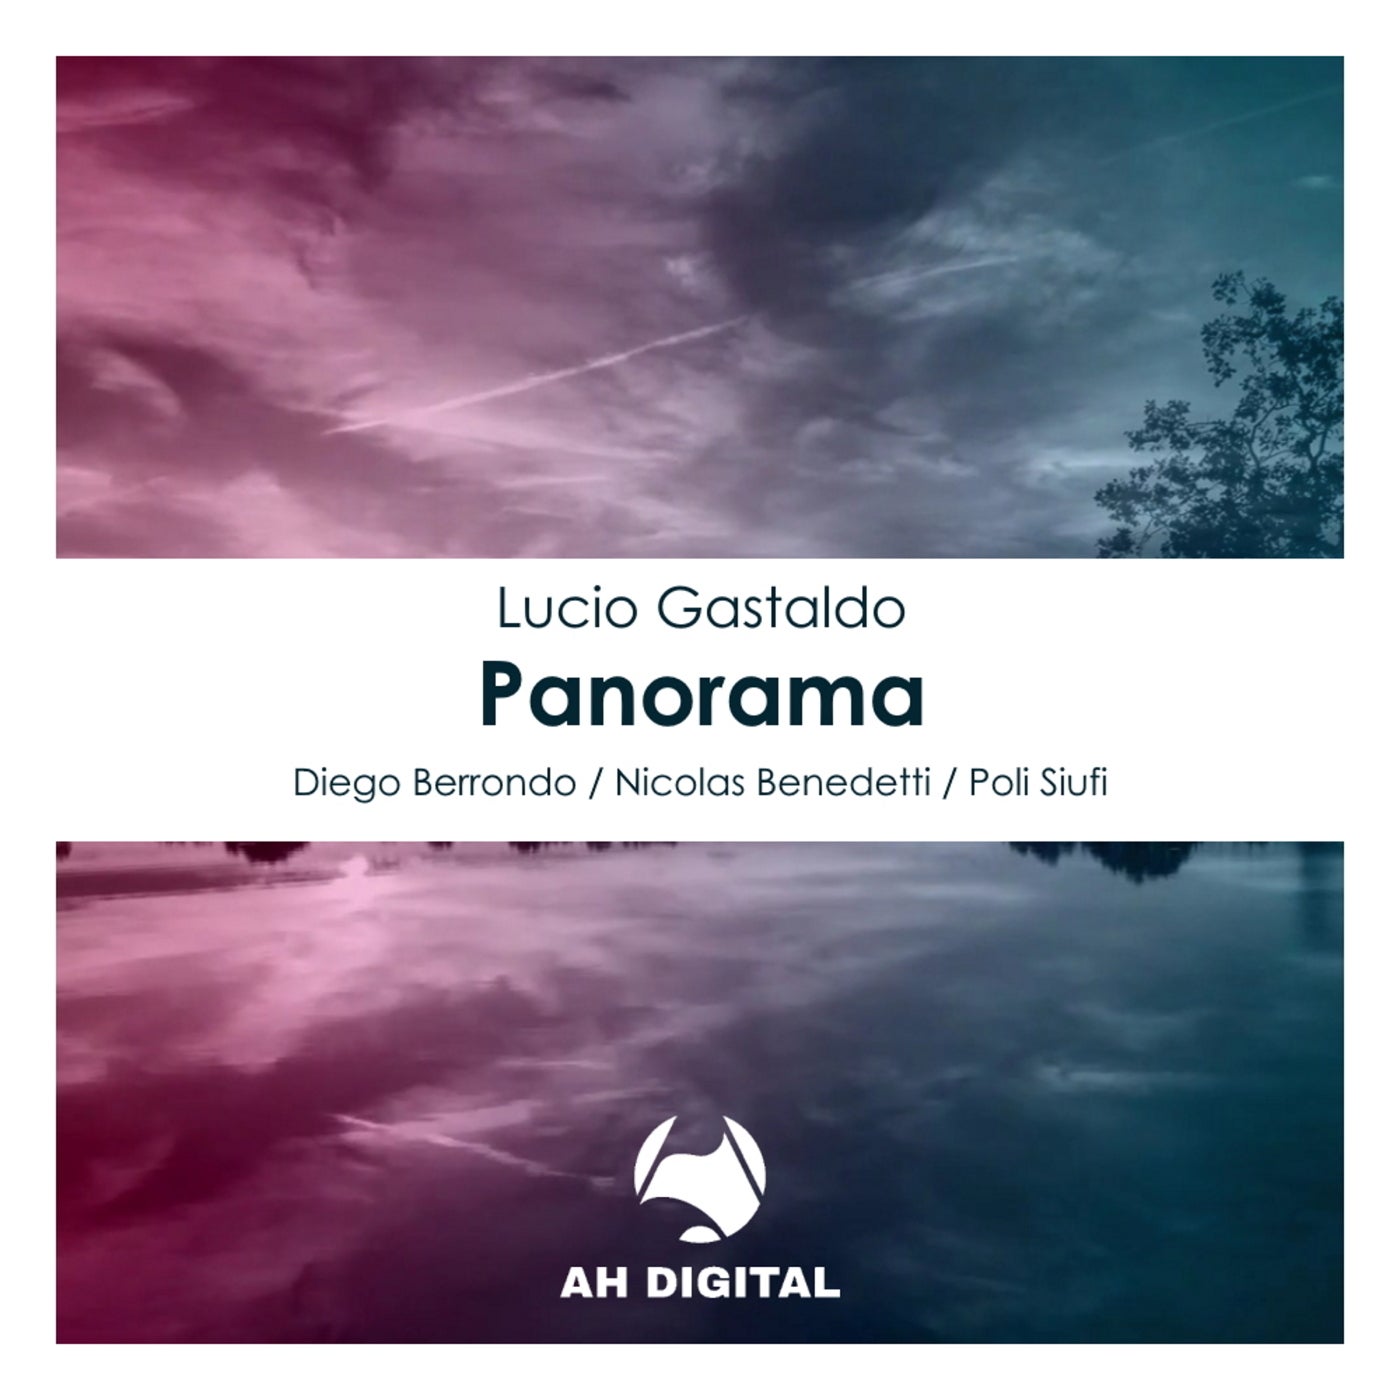 Lucio Gastaldo - Panorama (Nicolas Benedetti Remix)